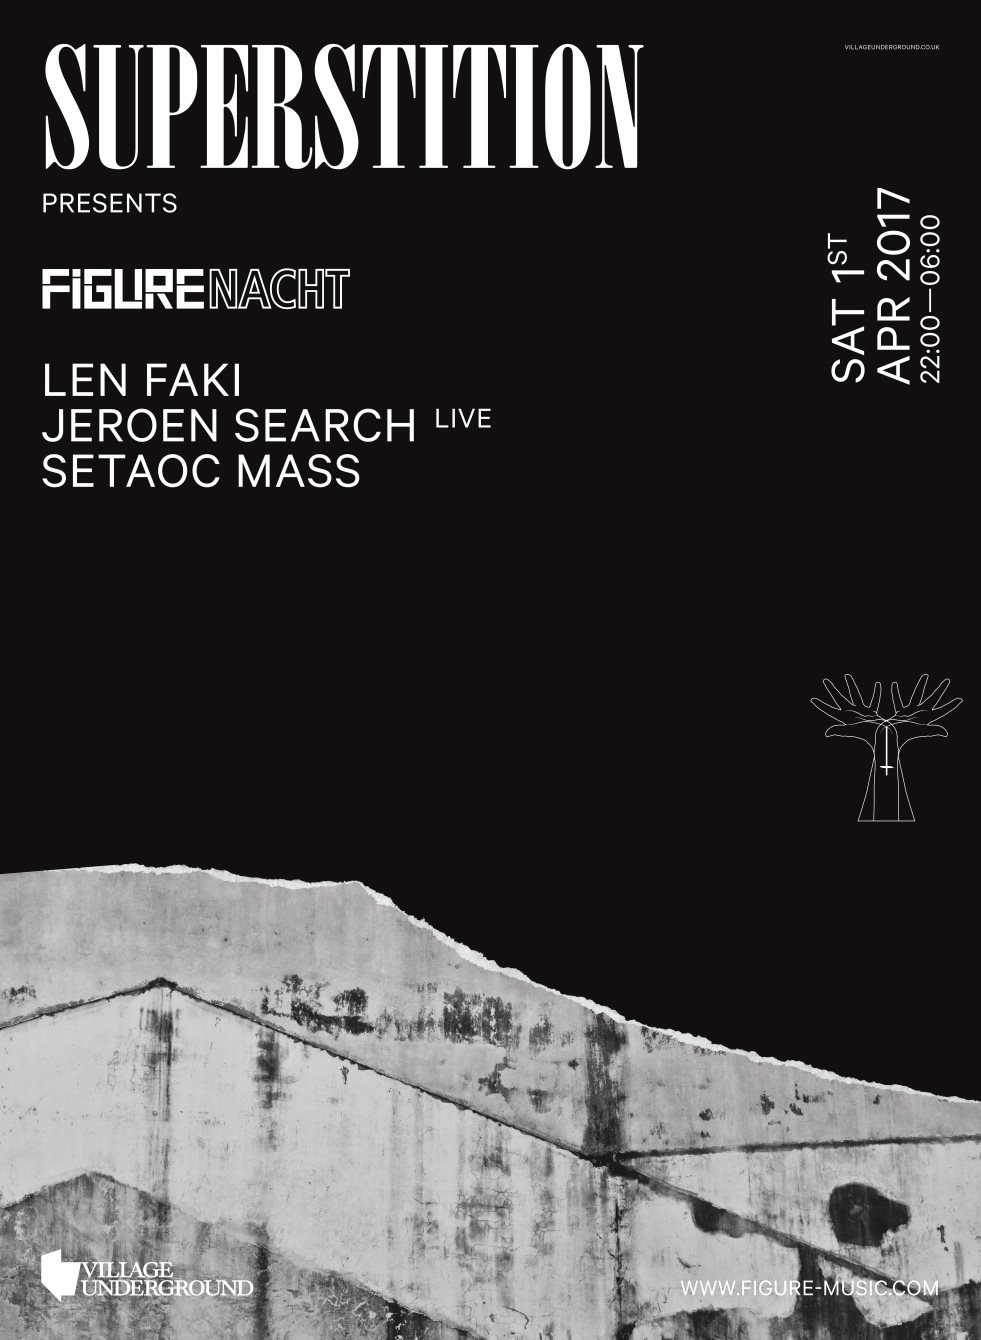 Superstition presents Figure Nacht - Len Faki, Jeroen Search, Setaoc Mass - Flyer front